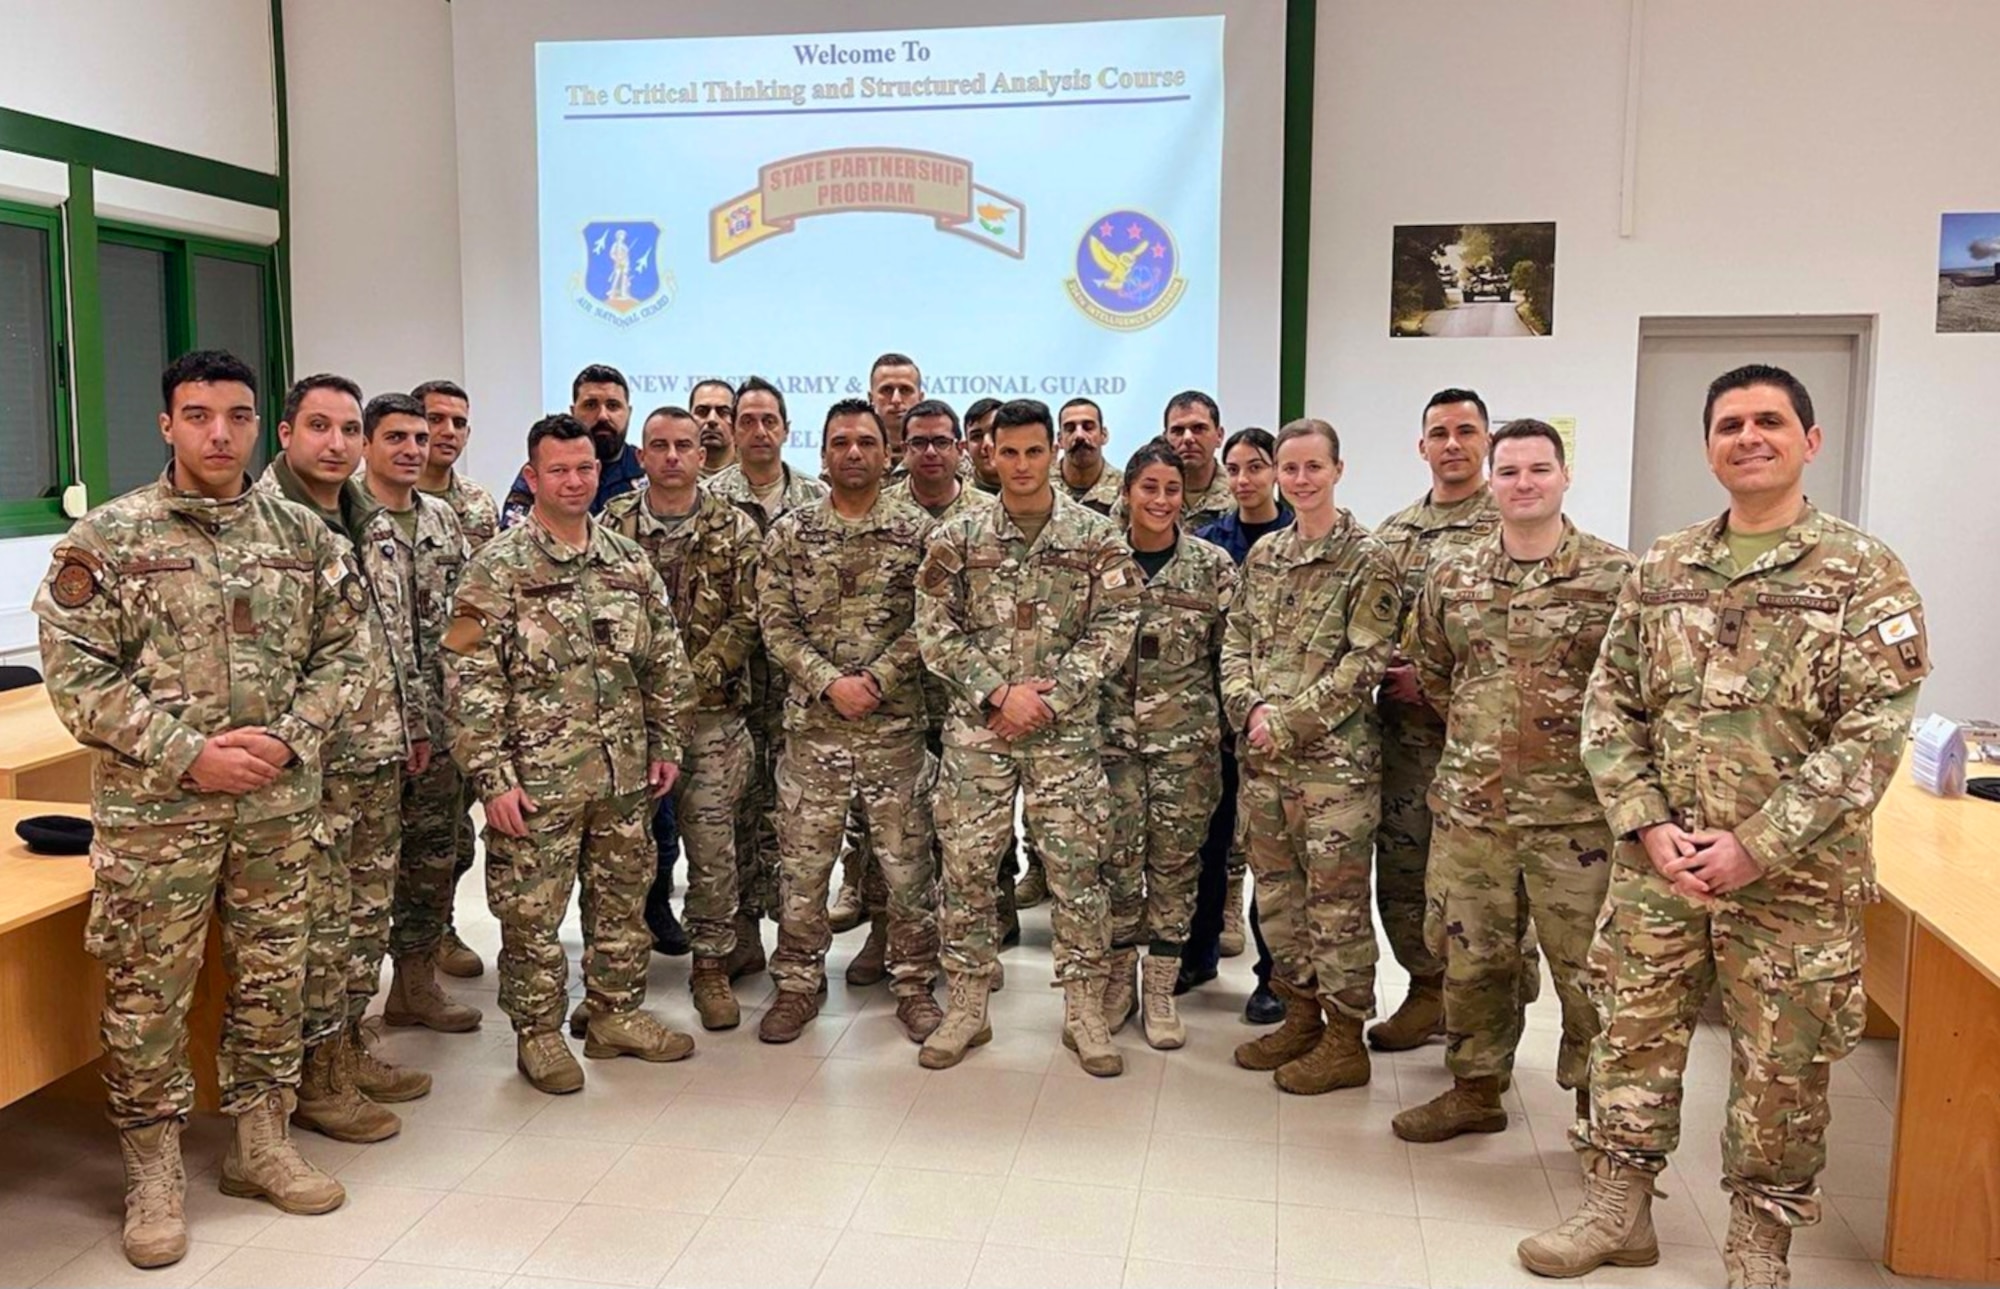 New Jersey National Guard State Partnership Program